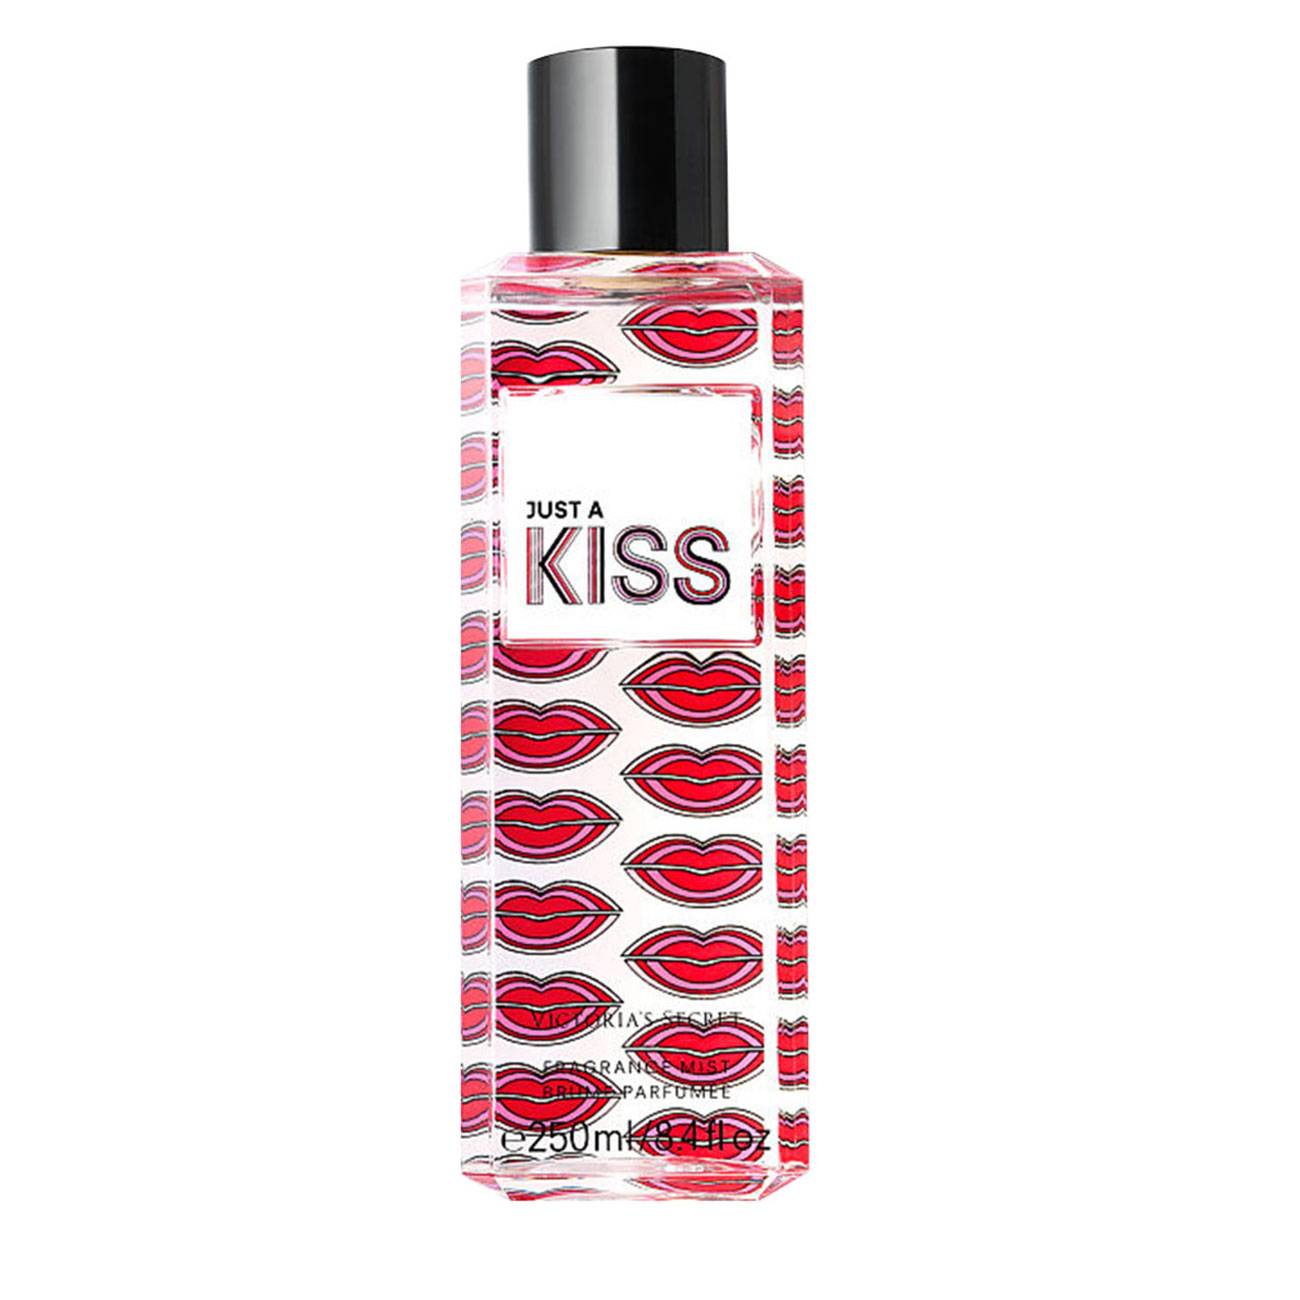 Set ingrijire corp Victoria’s Secret JUST A KISS MIST 250ml cu comanda online